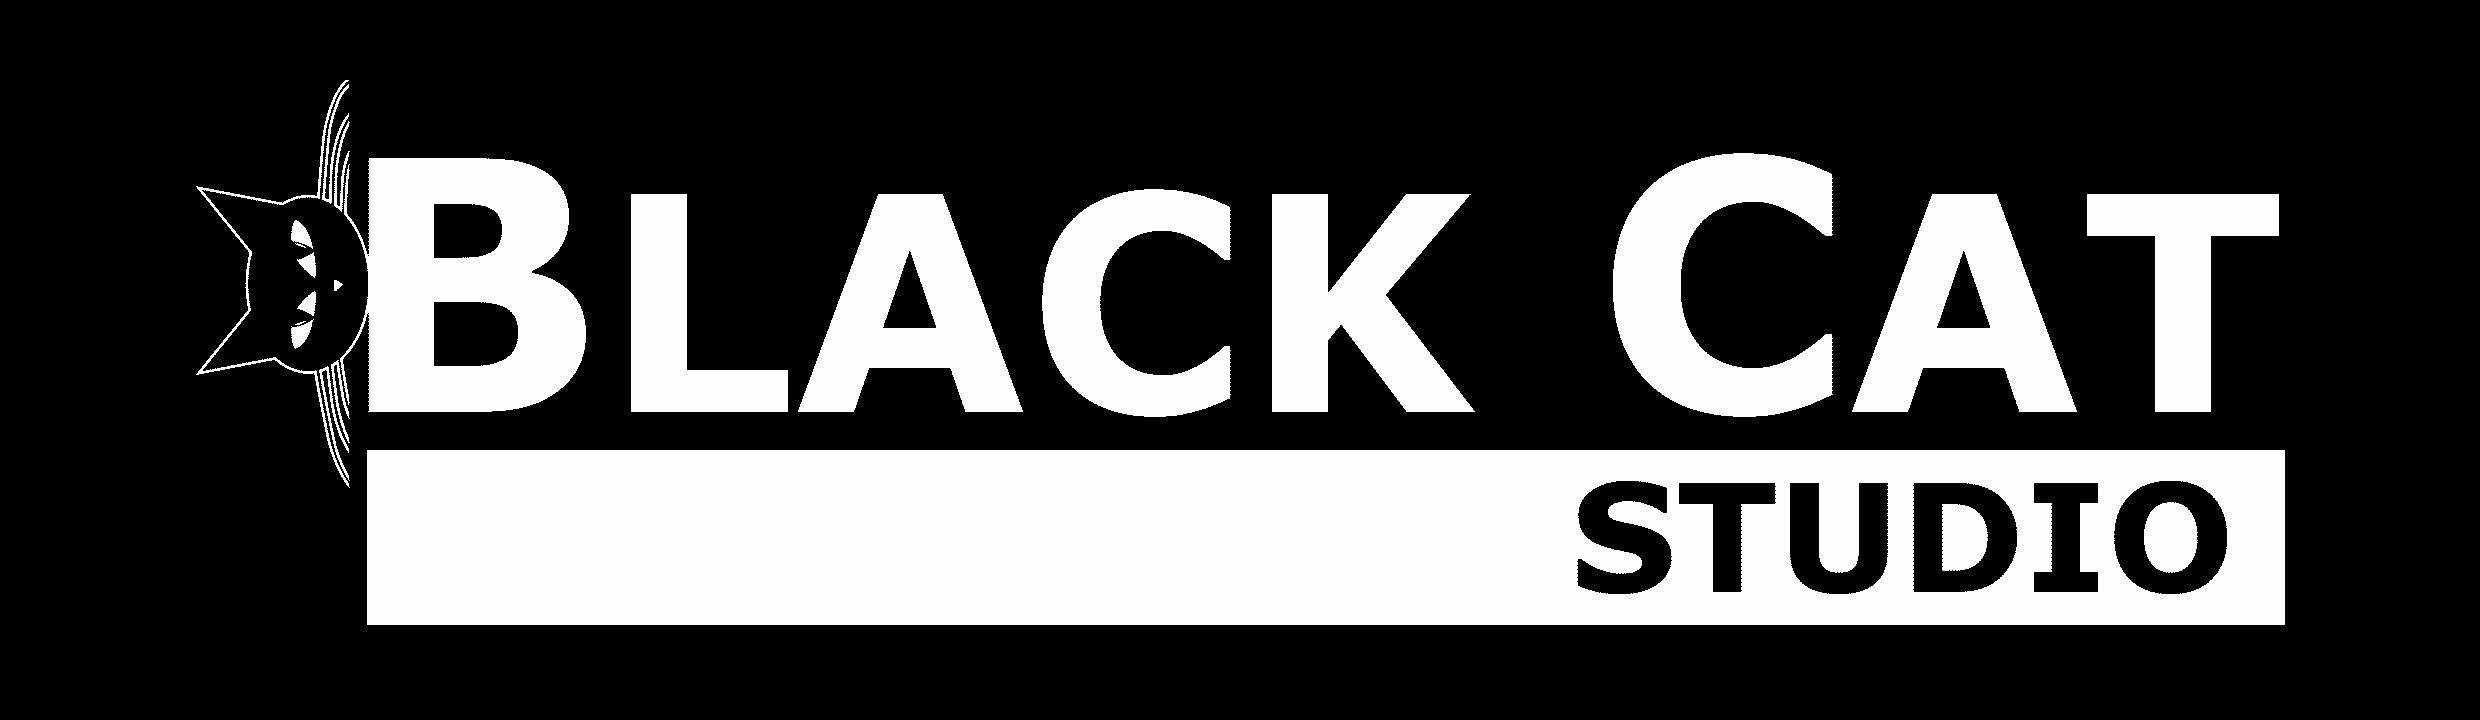 Black Cat Studio - agencja content marketing